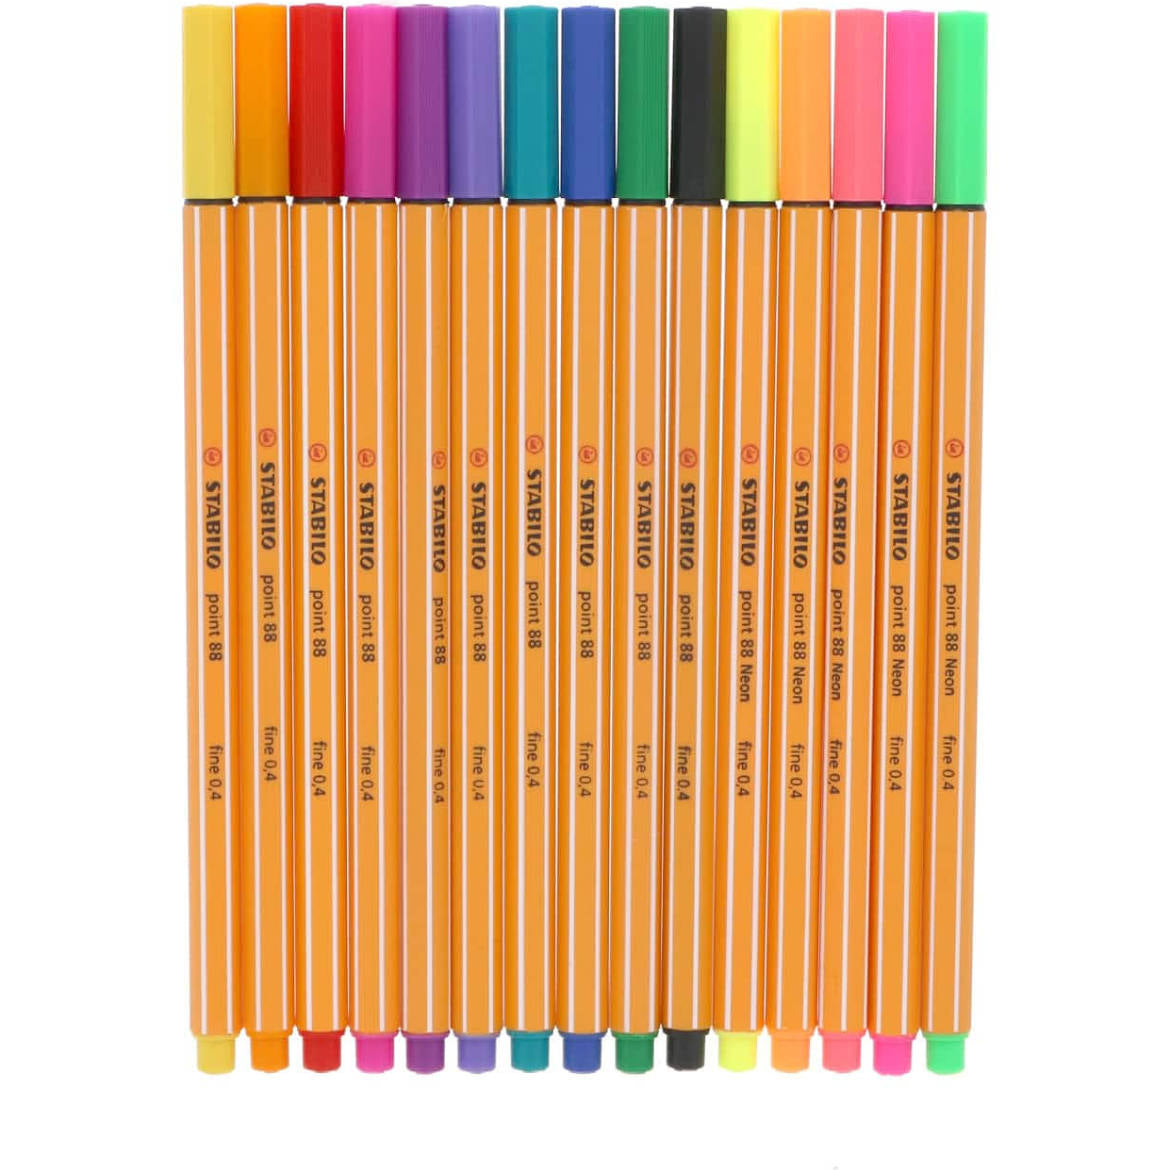 Stabilo Point 88 Fineliner Felt Tip Pens | 16 Colors